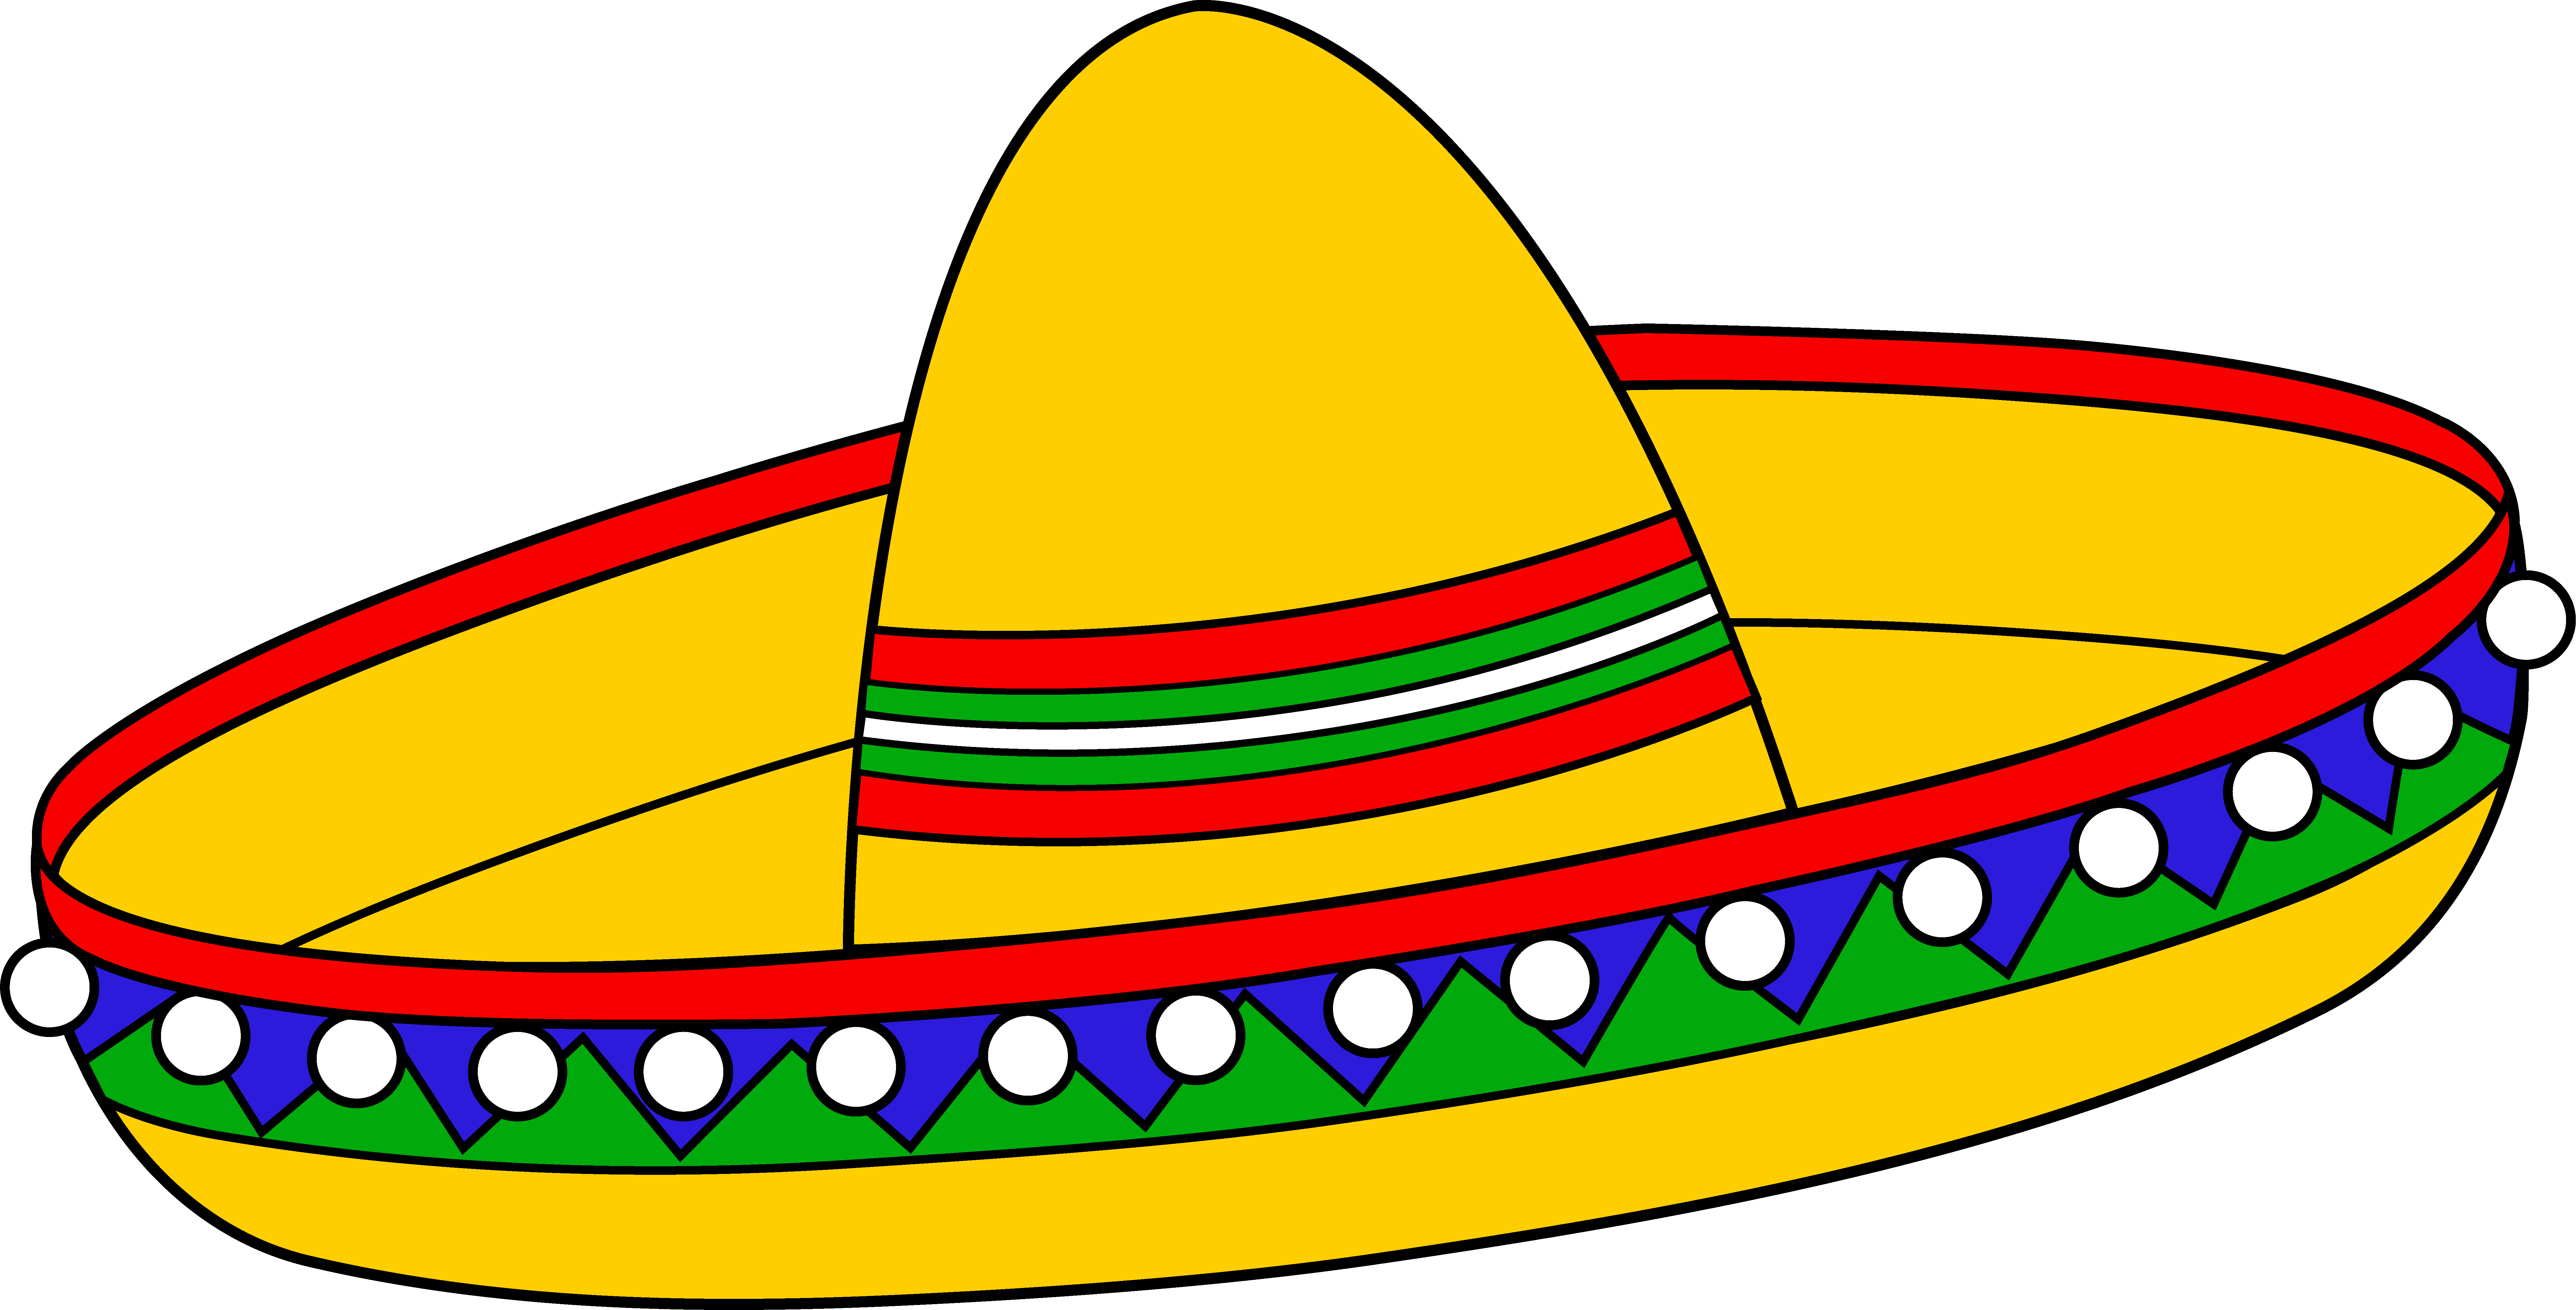 Colorful mexican sombrero hat. Dancing clipart fiesta